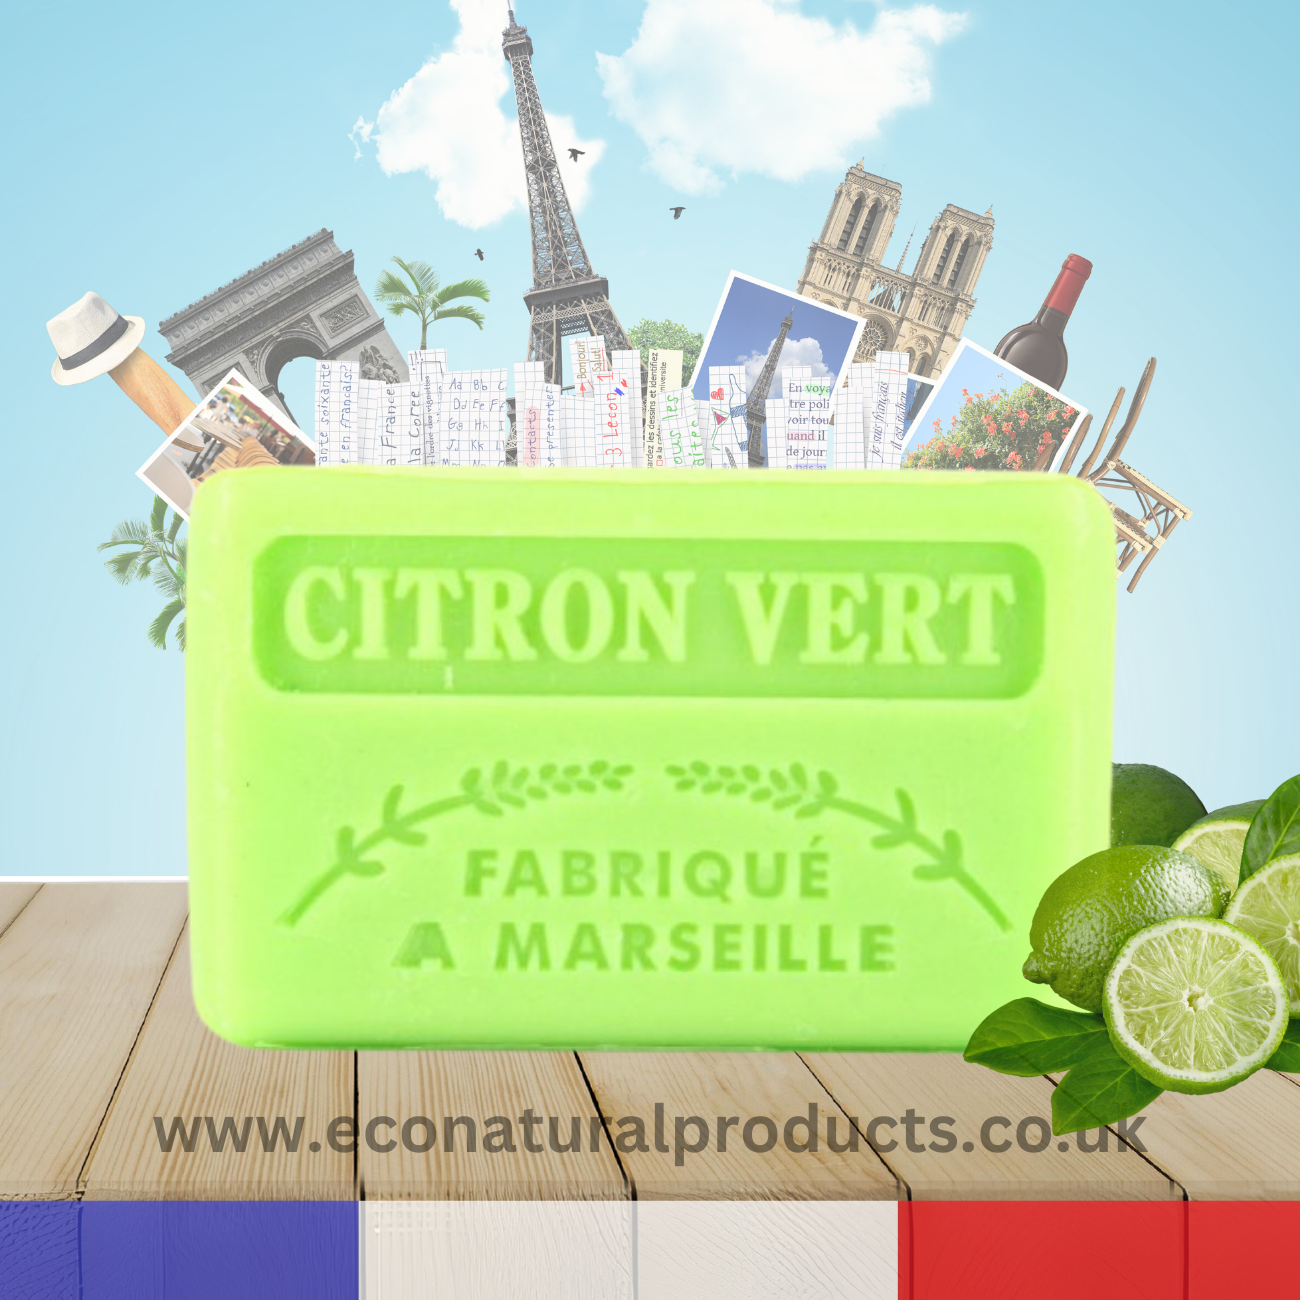 French Marseille Soap Citron Vert (Lime) 60g Soap